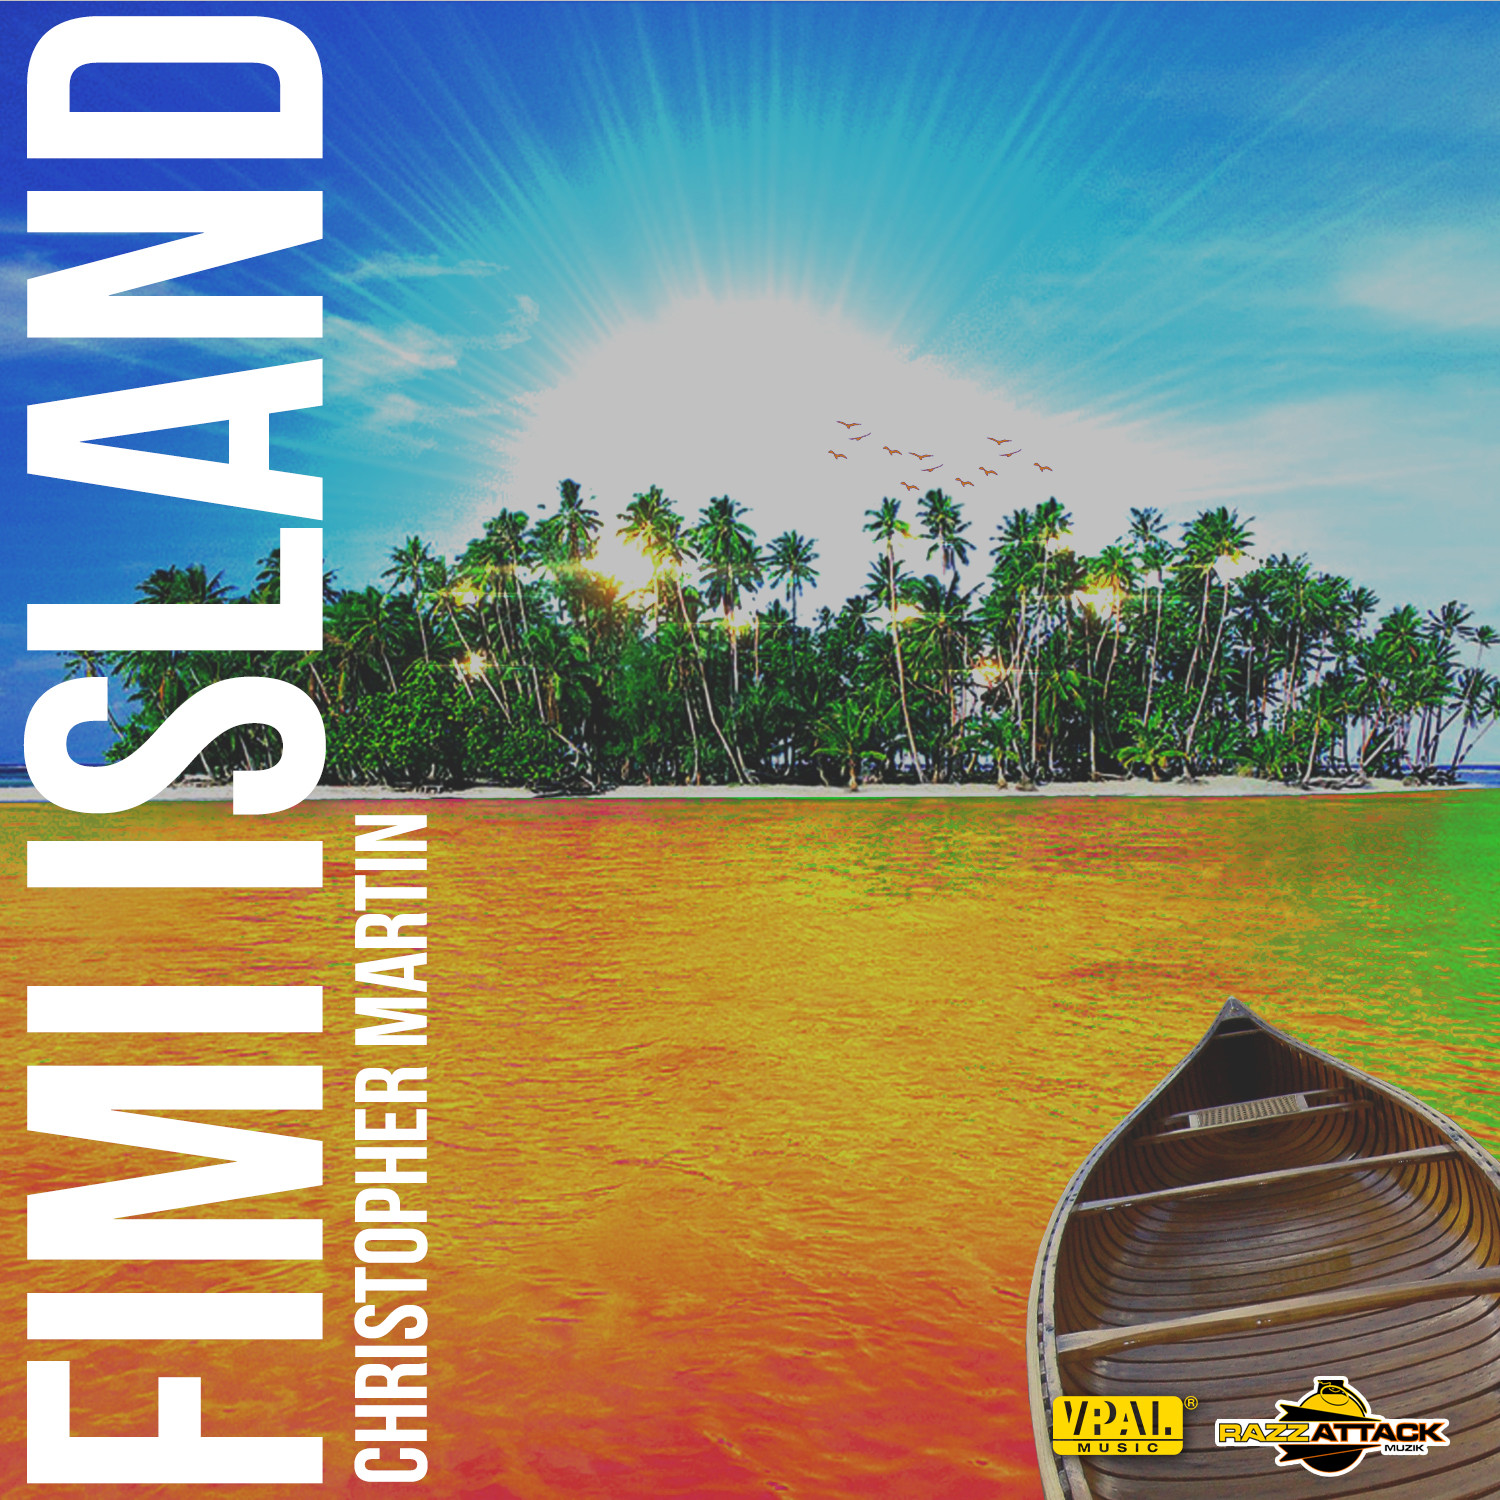 Fimi Island